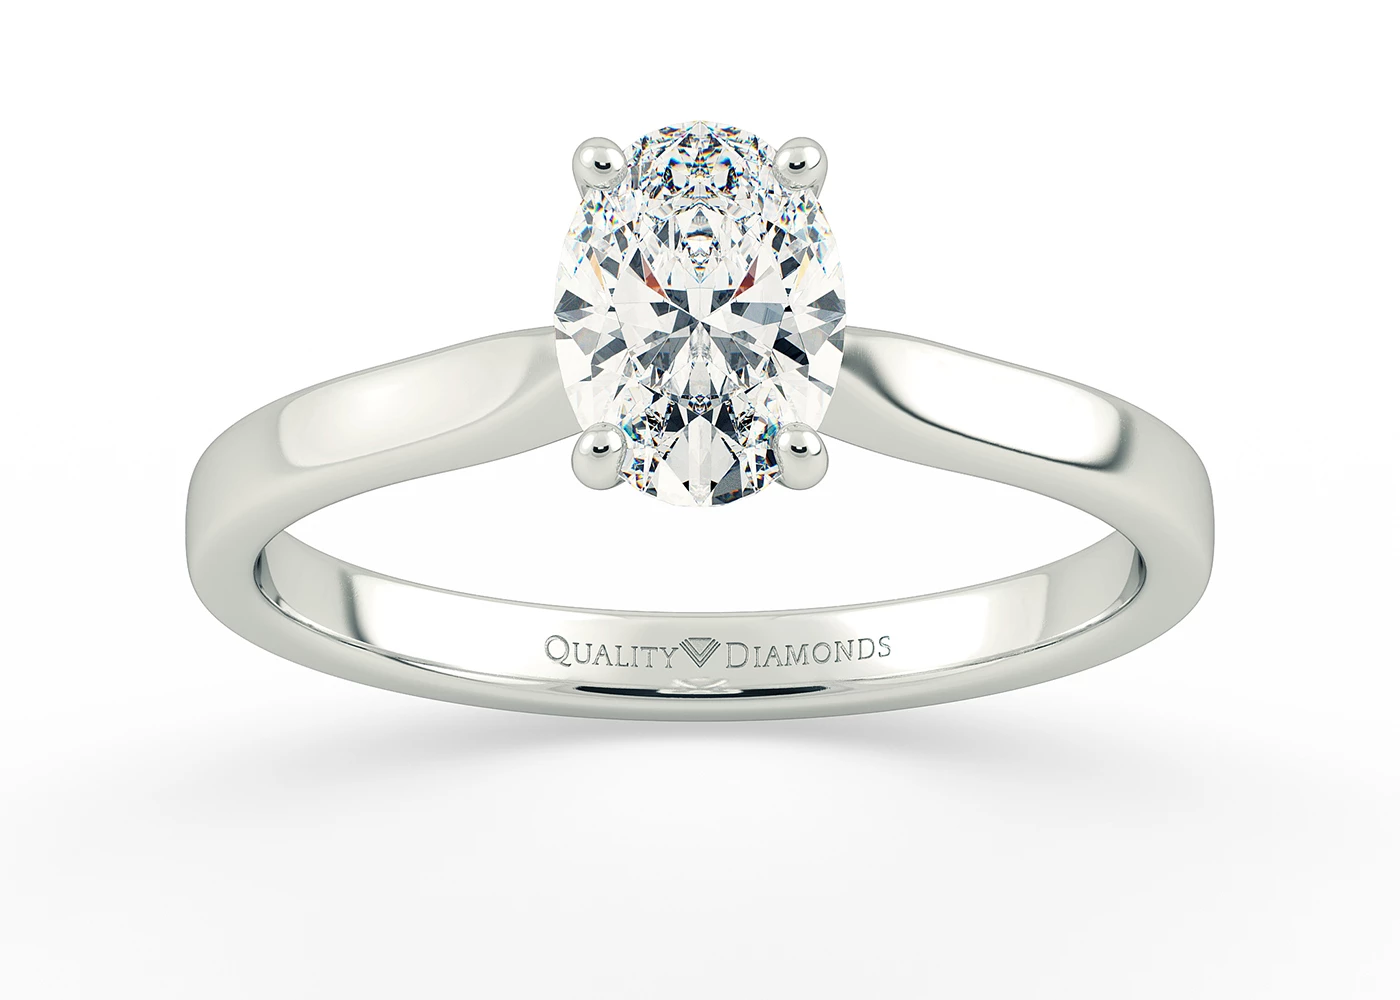 Oval Beau Diamond Ring in 18K White Gold